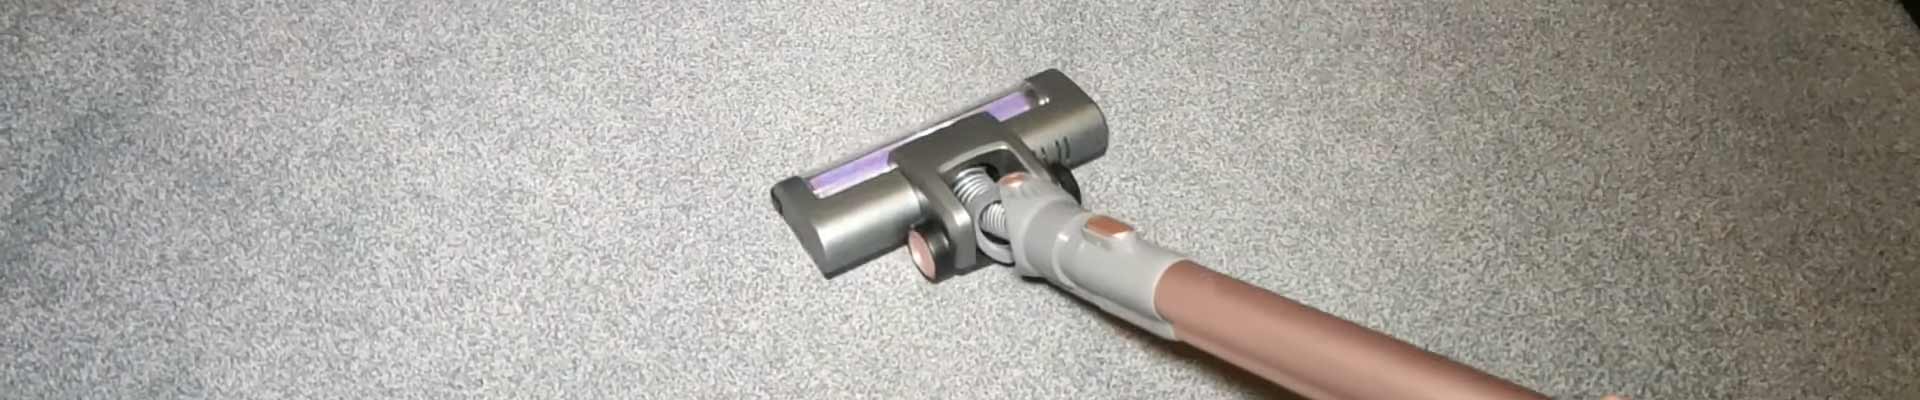 WOWGO Cordless Stick Vacuum Cleaner